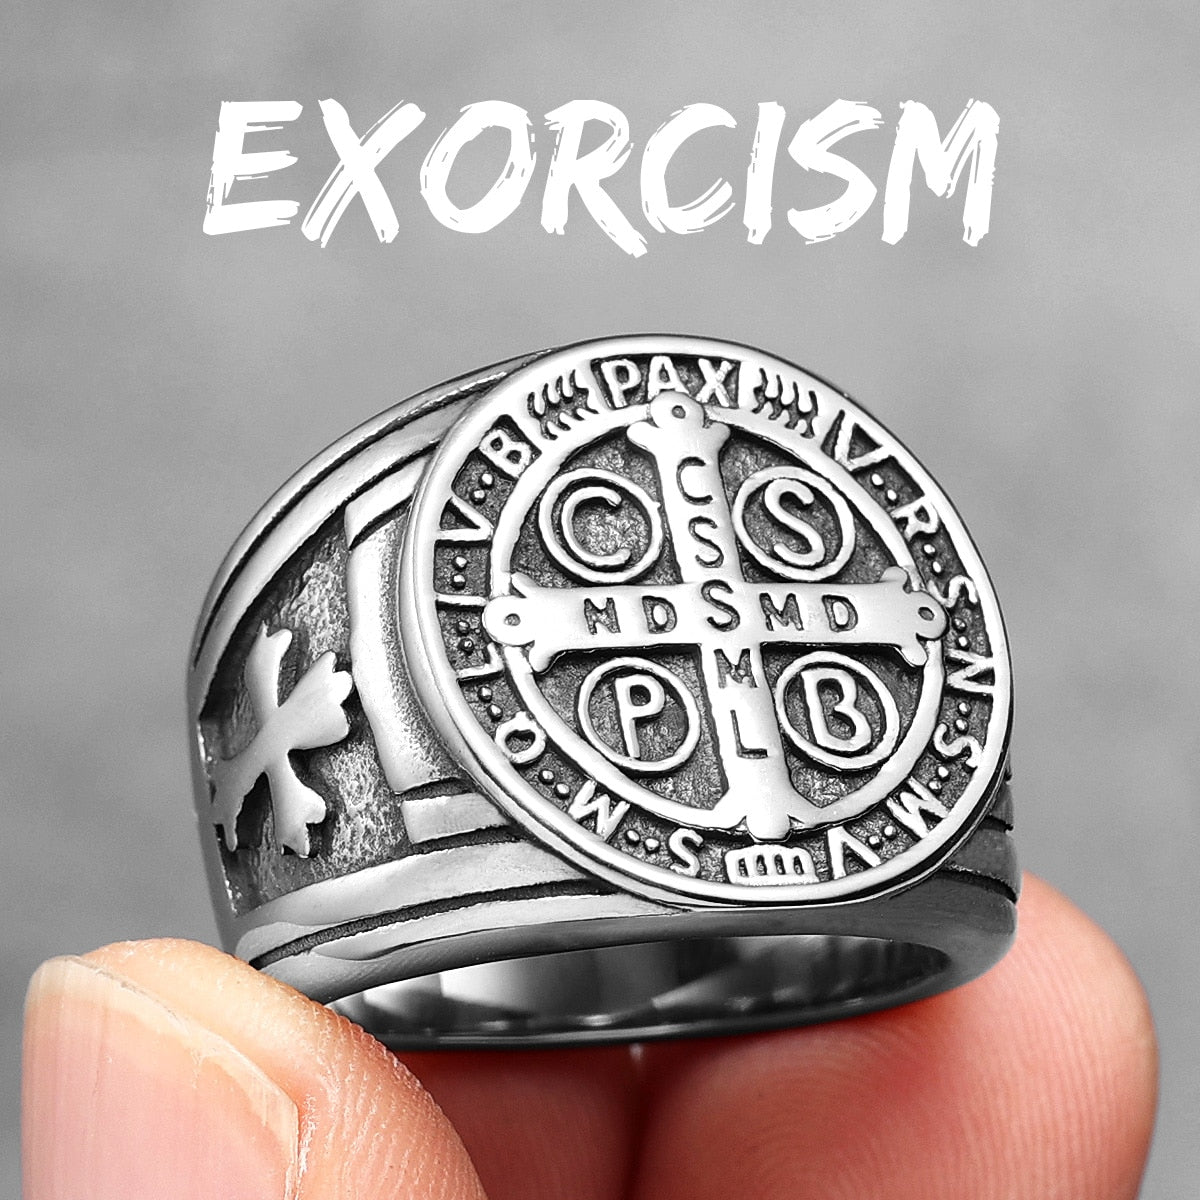 Exorcism Saint Benedict Cspb Cross Men Rings Punk Hip Hop for Boyfriend Male Stainless Steel Jewelry Creativity Gift Wholesale